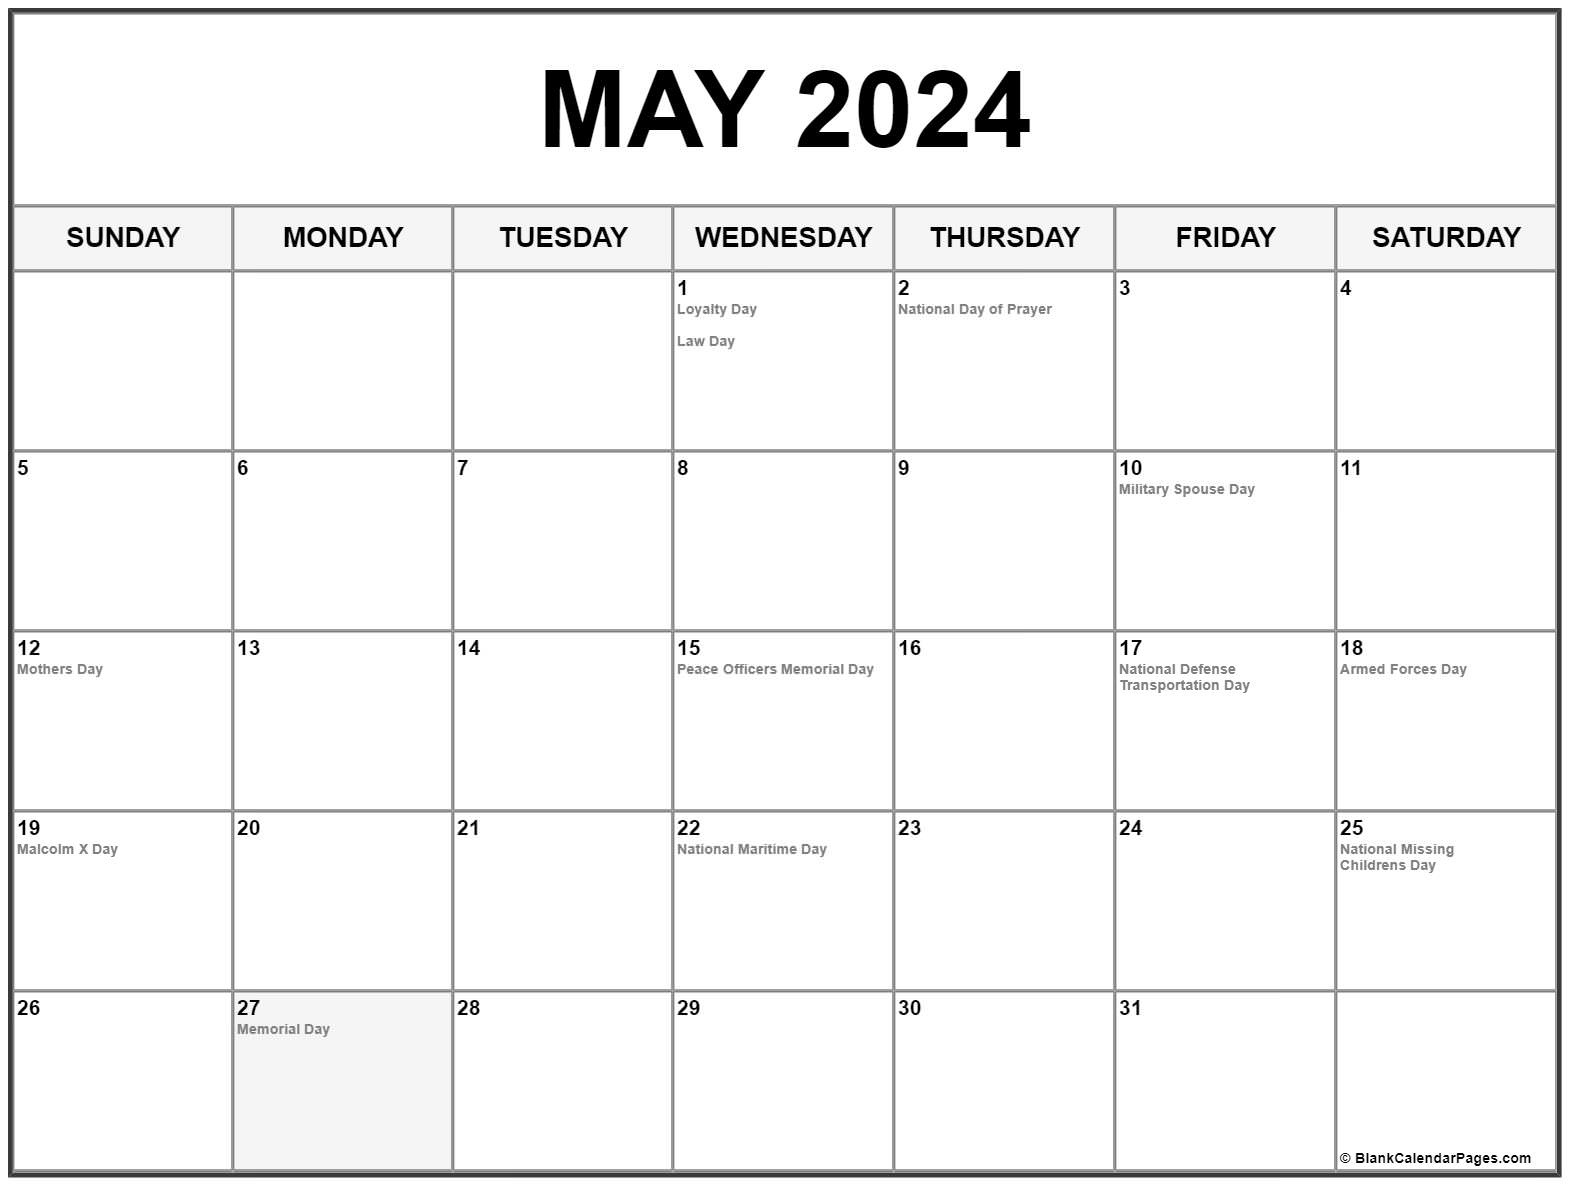 May Calendar 2021 With Holidays May 2021 calendar with holidays